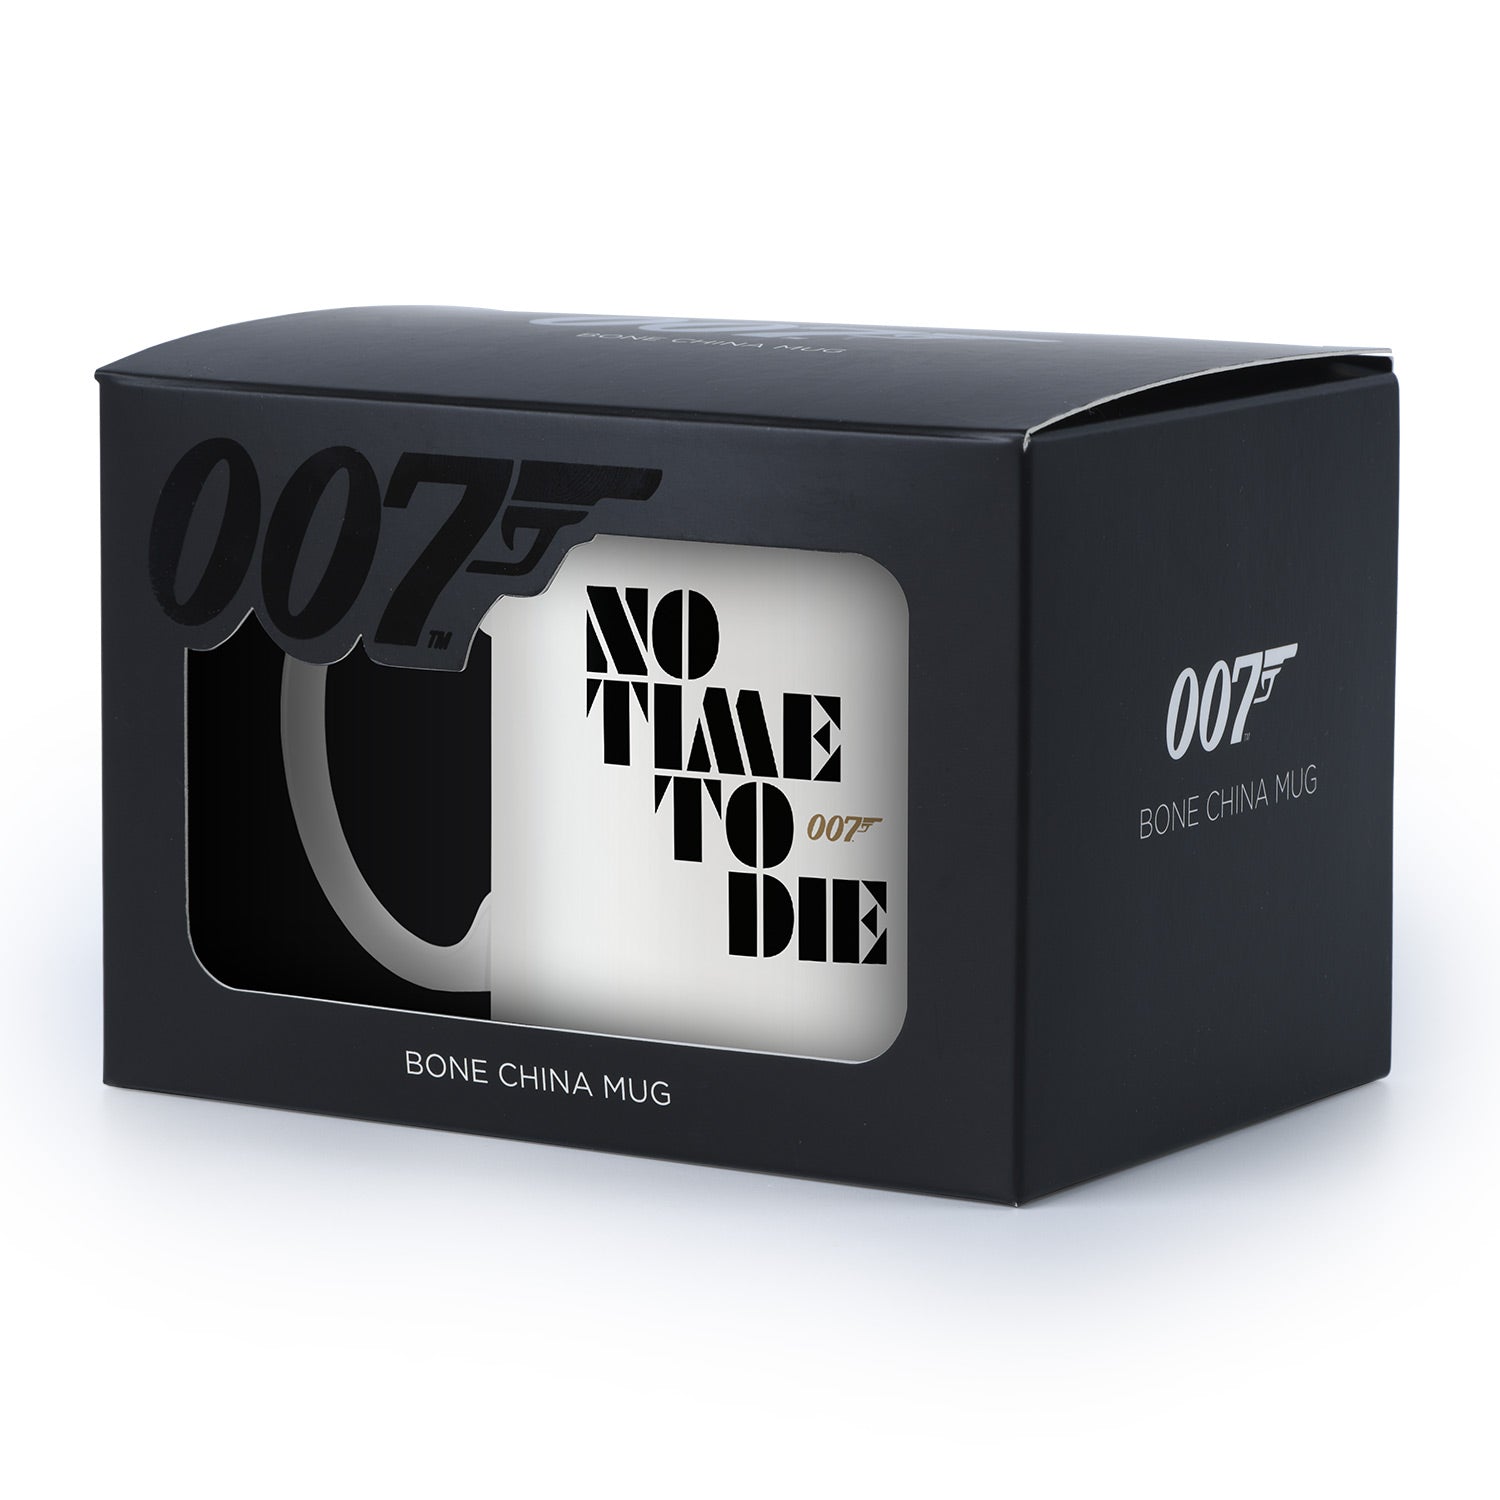 James Bond No Time To Die Bone China Mug 007Store